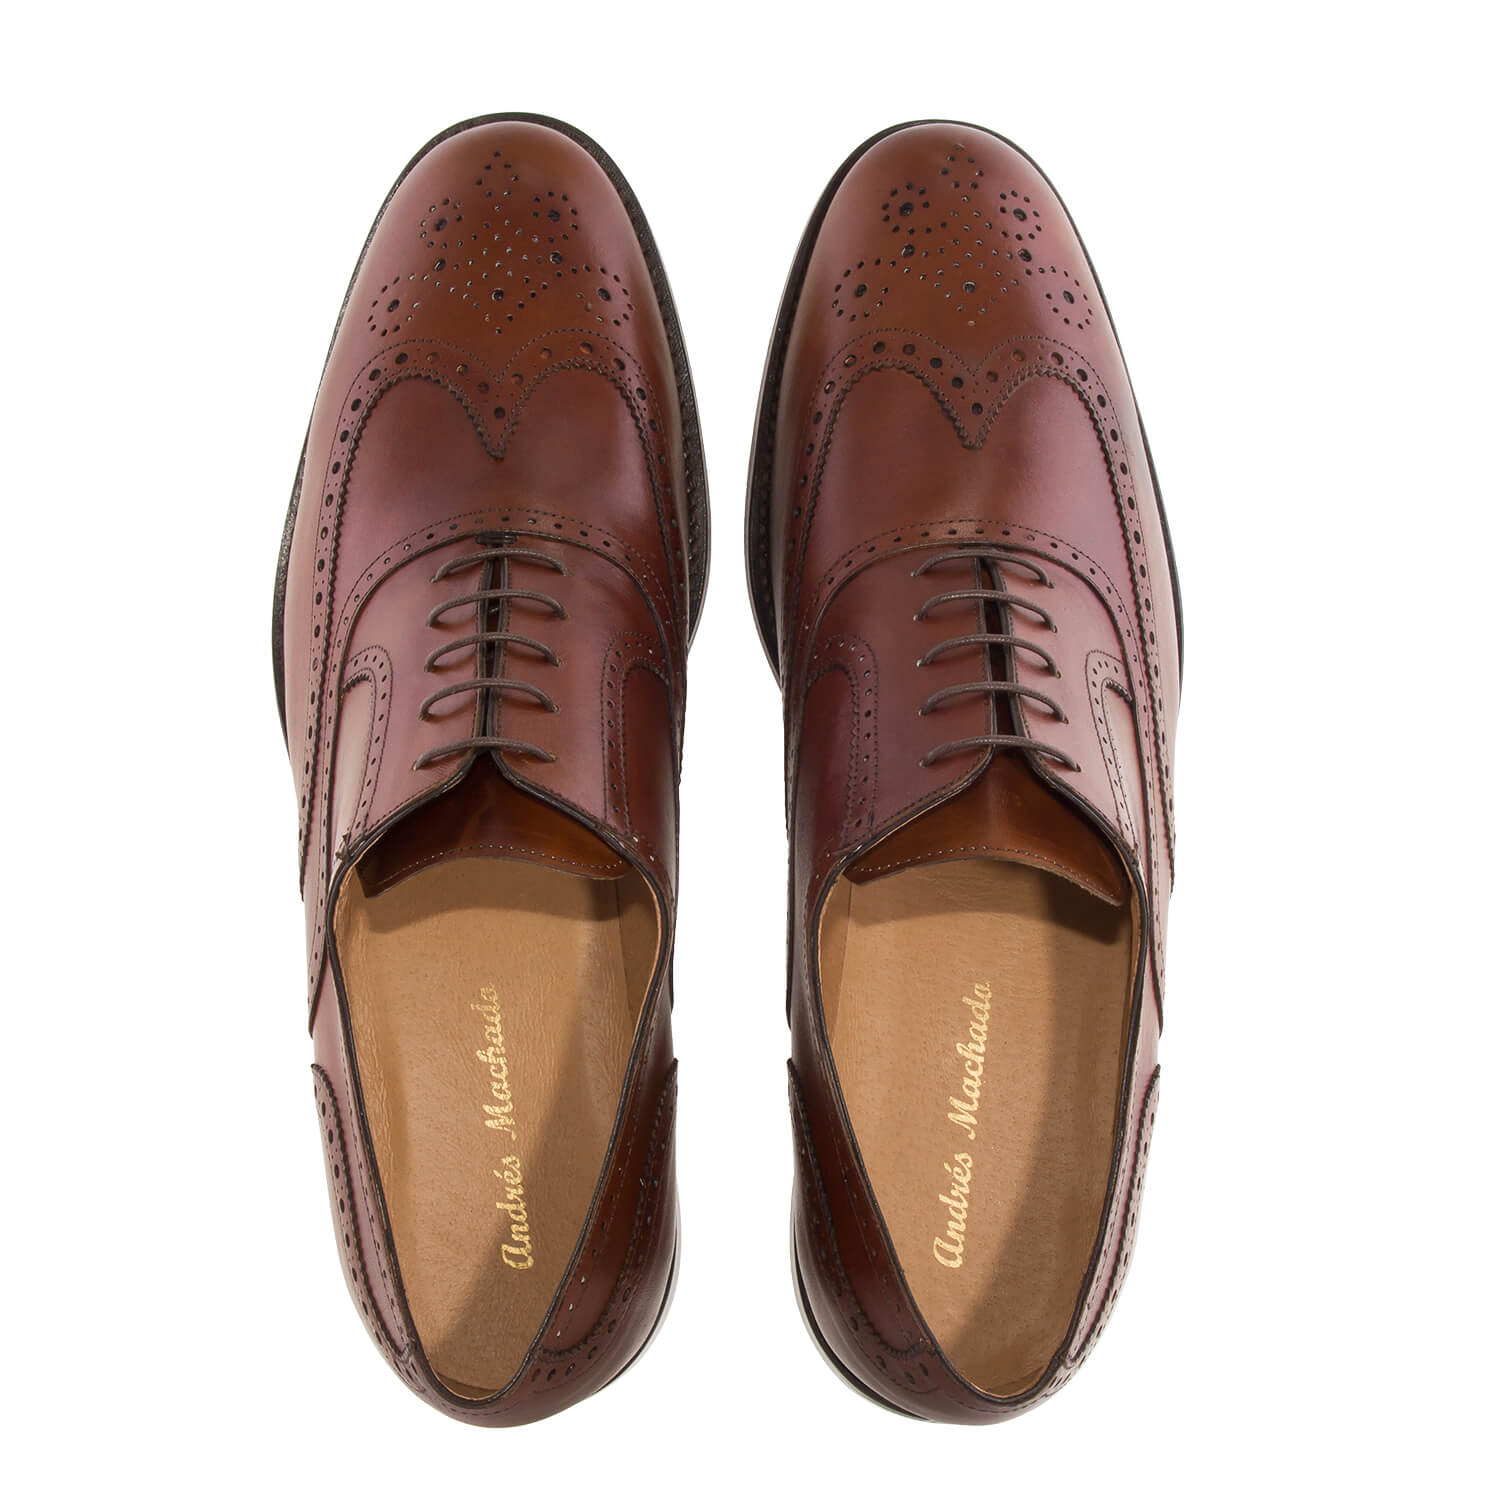 Chaussures Hommes Style Oxford En Cuir Acajou 